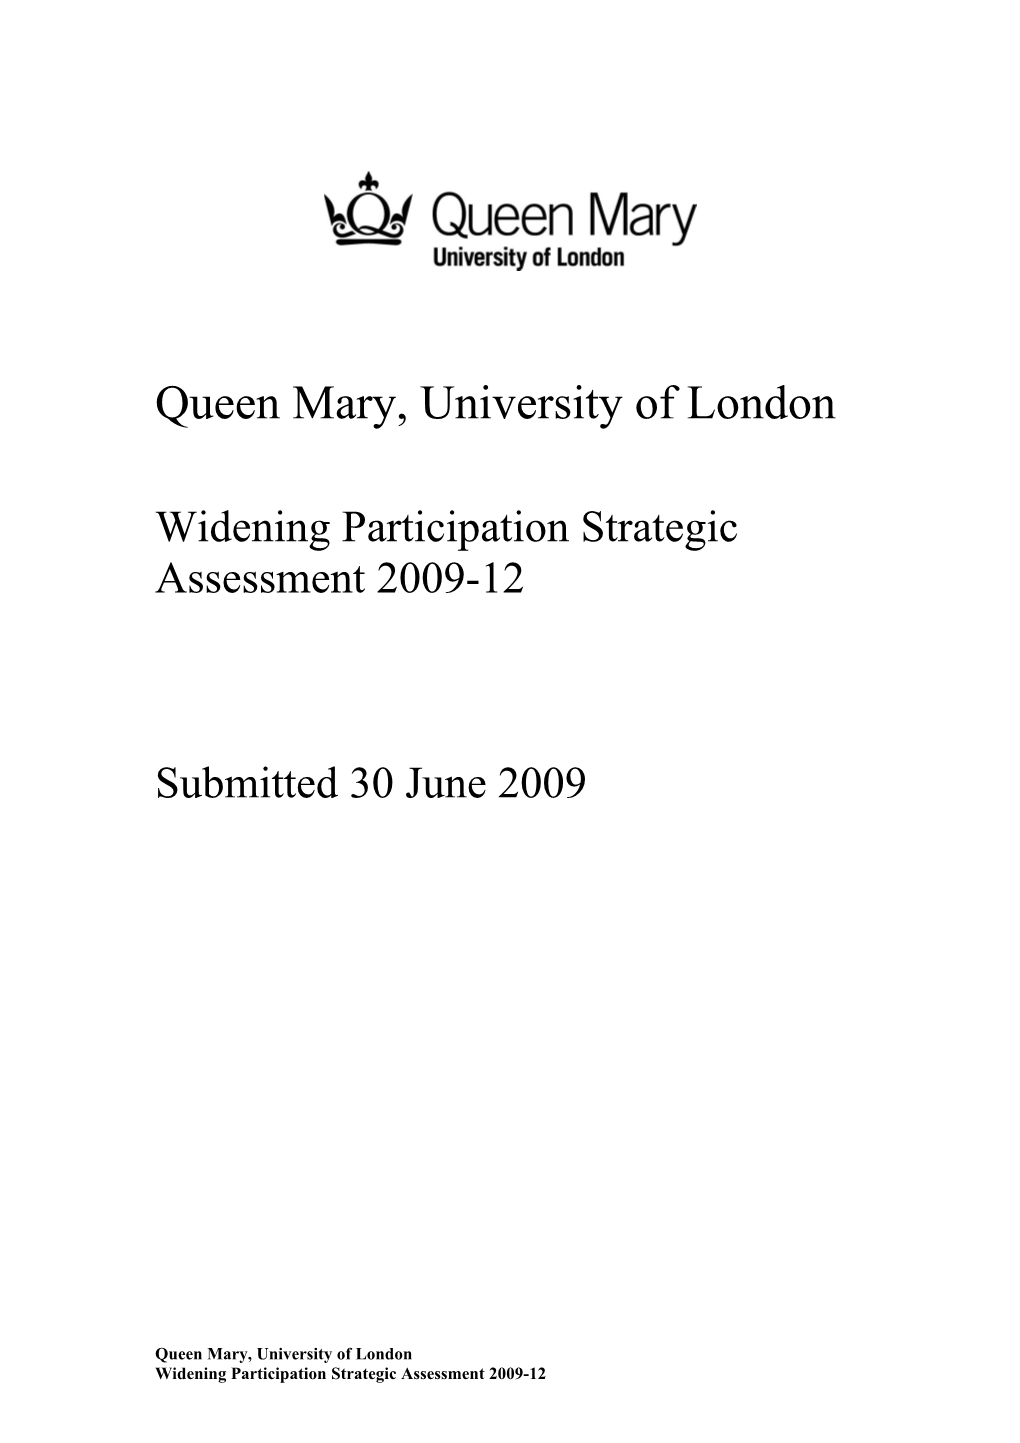 Widening Participation Strategic Assessment 2009-12